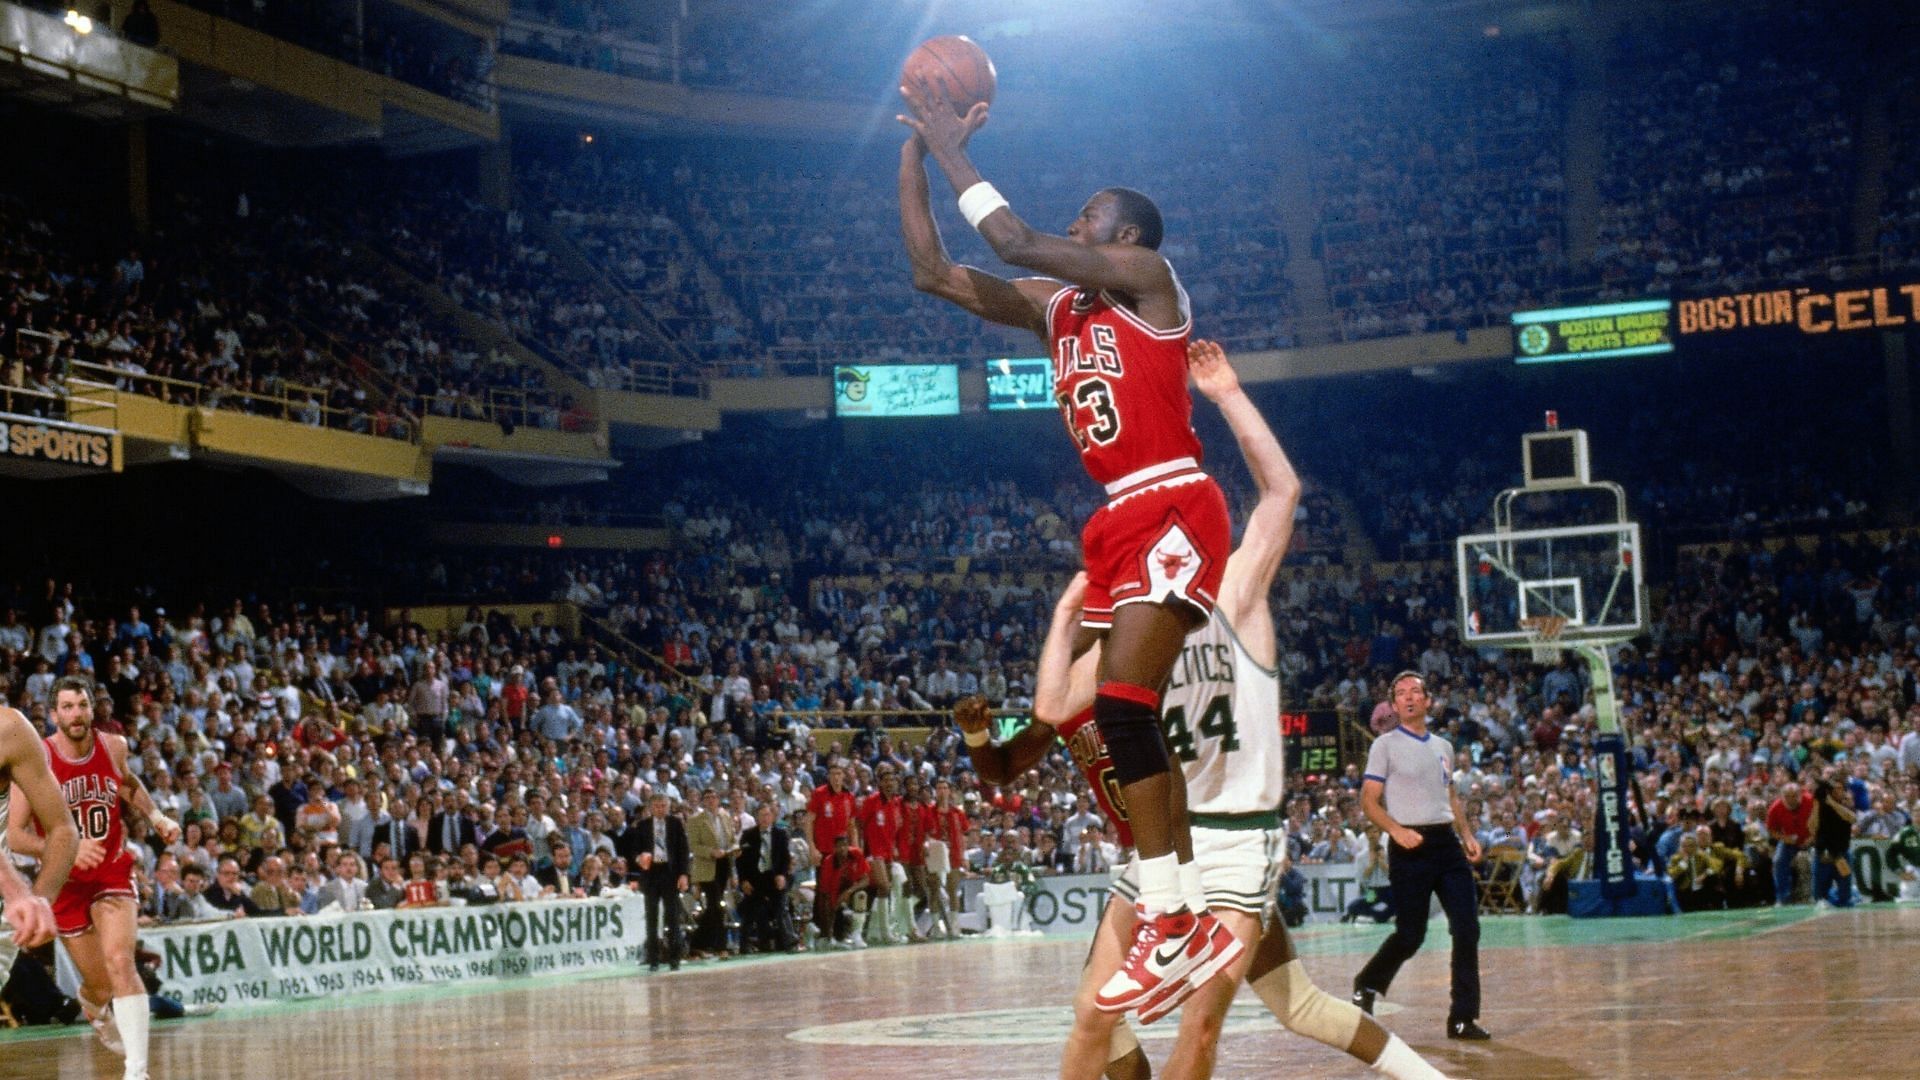 Michael Jordan against the Boston Celtics.